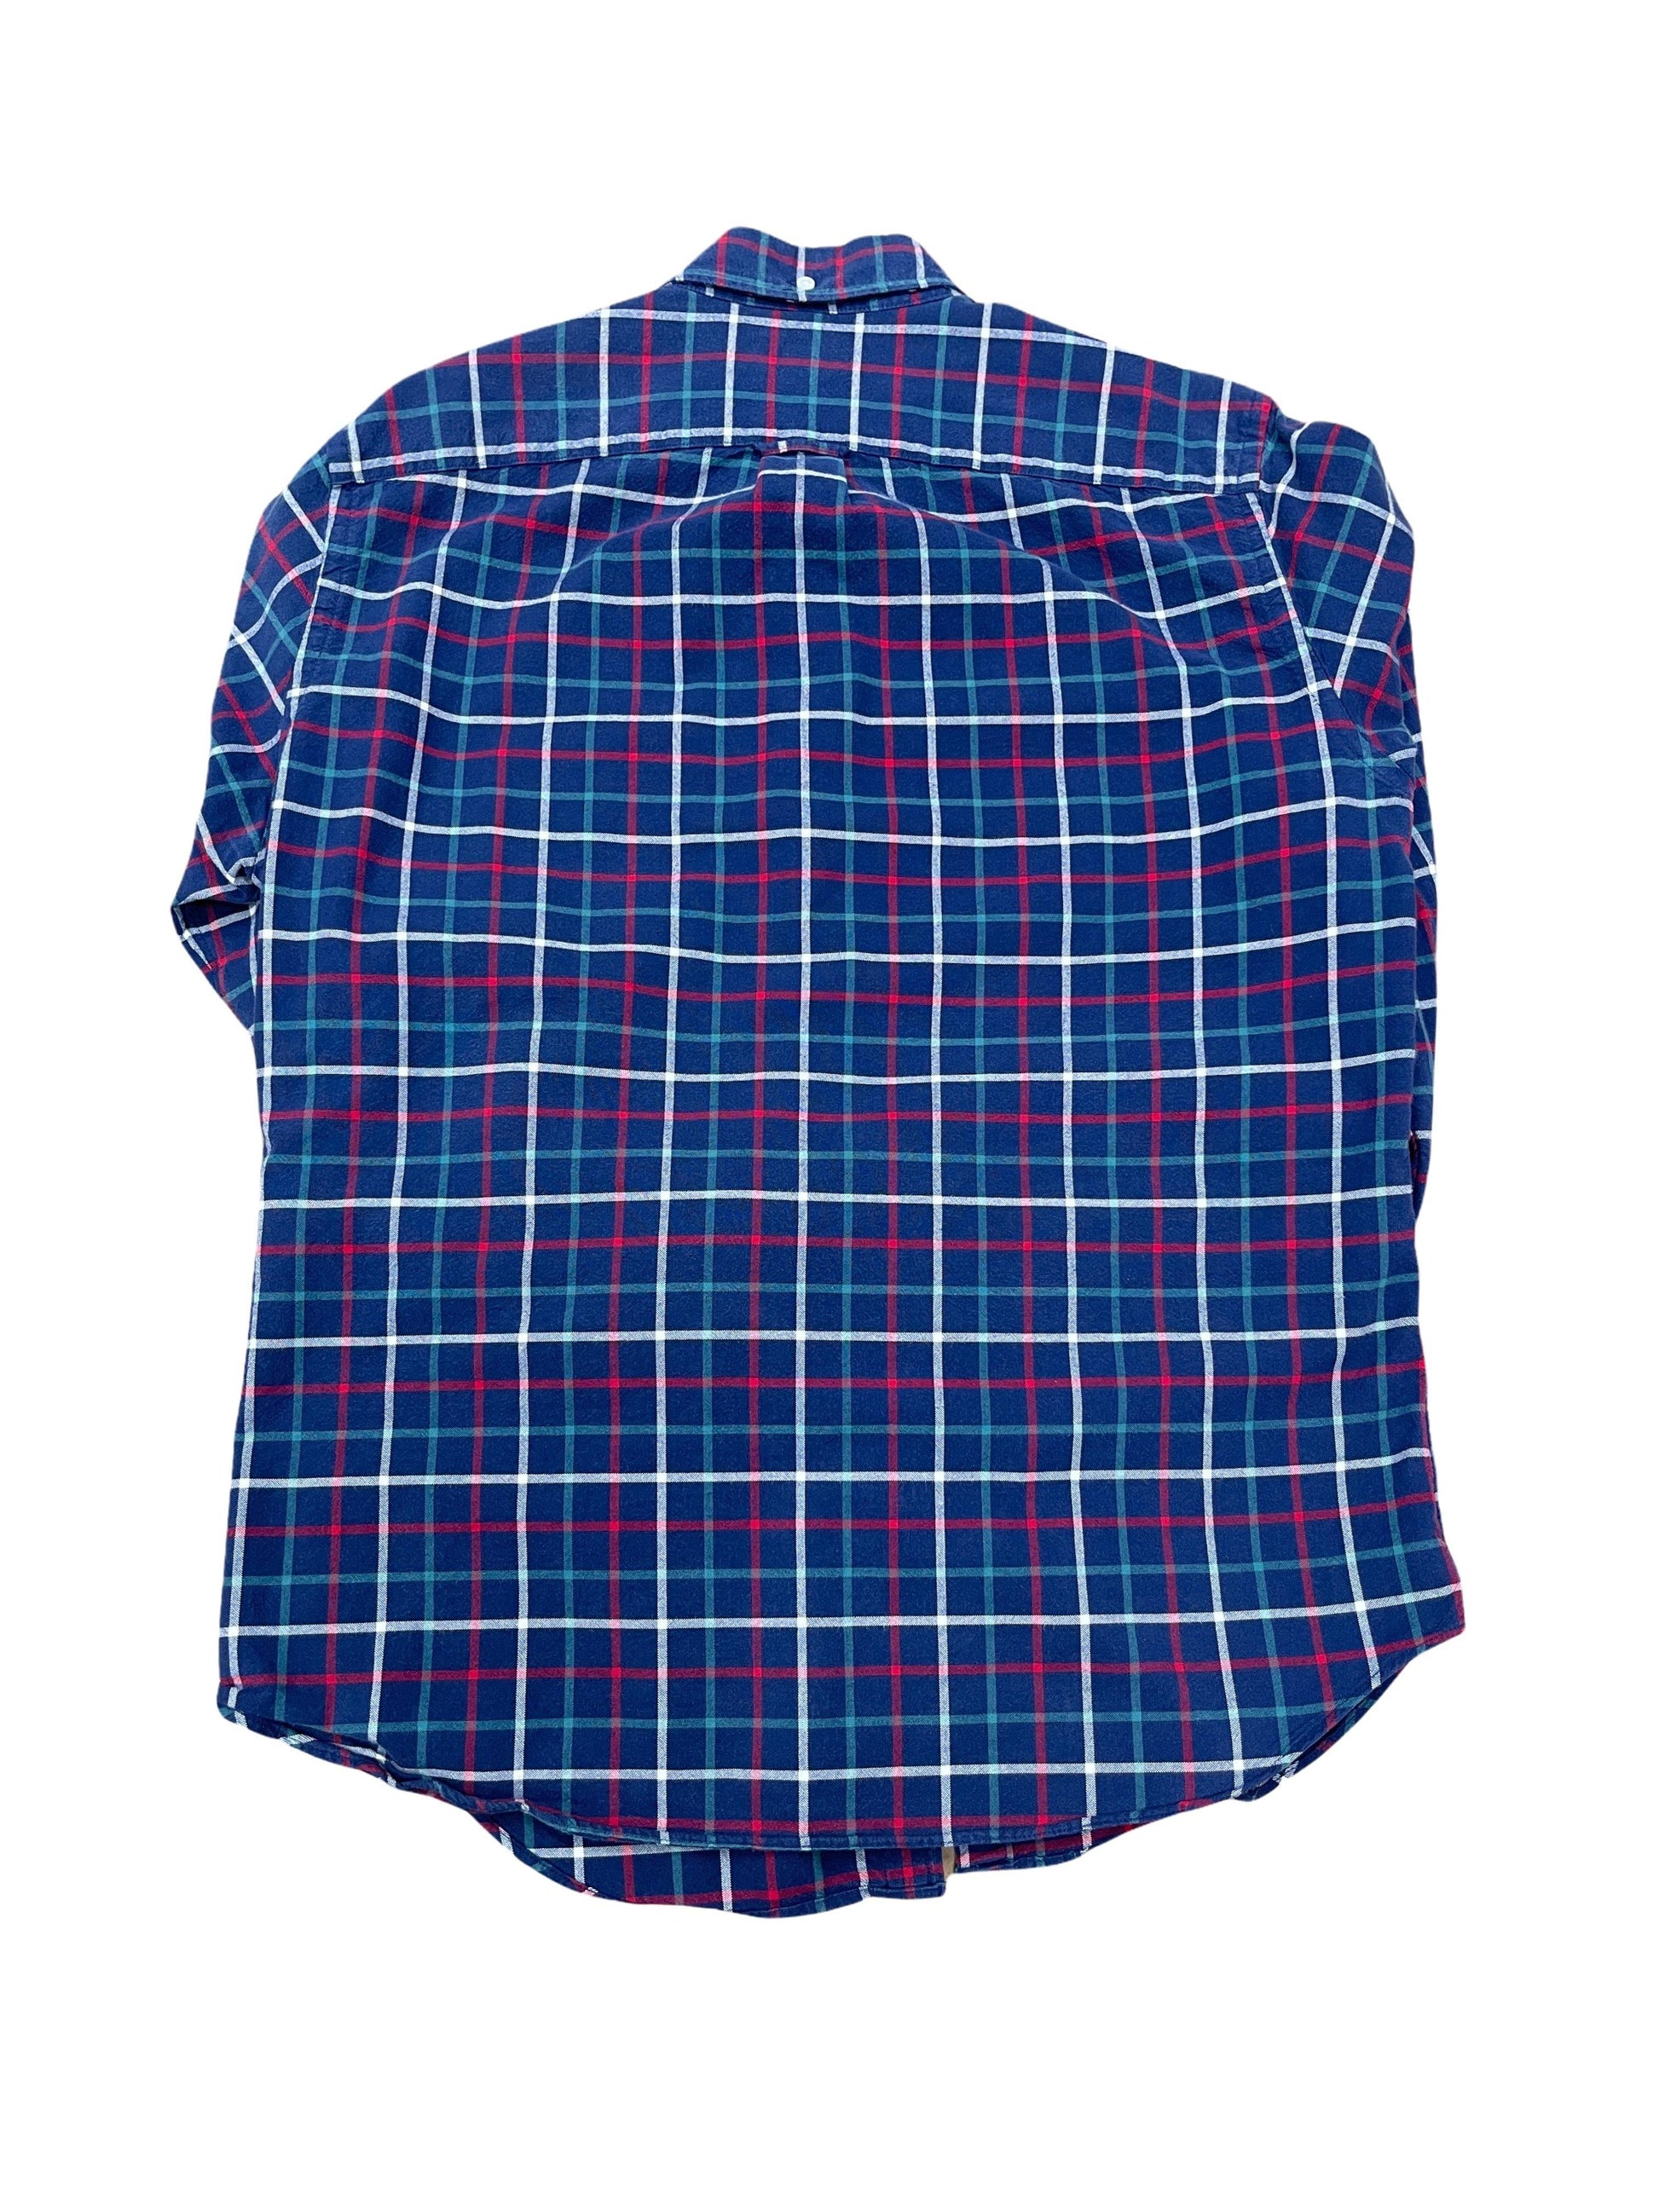 J. Crew Blue Plaid Flannel Button Down Shirt - Medium Genuine Design luxury consignment